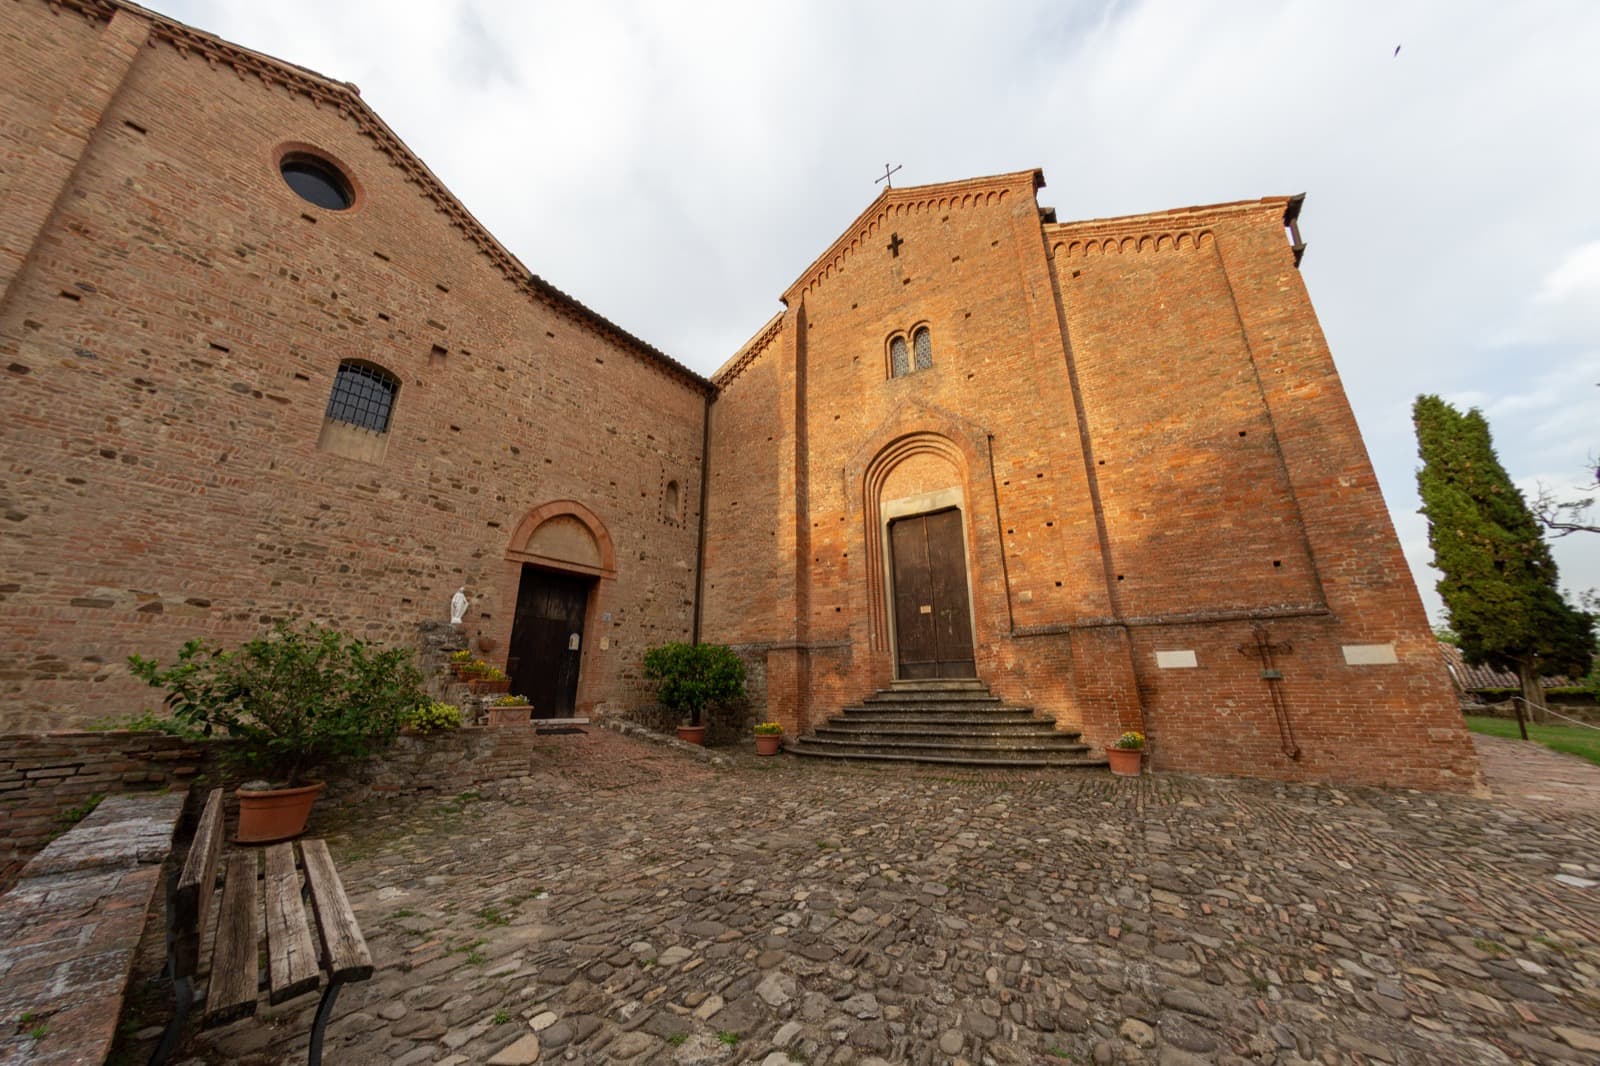 Monteveglio Abbey (Bologna) | Ph. Francesco De Marco, via shutterstock